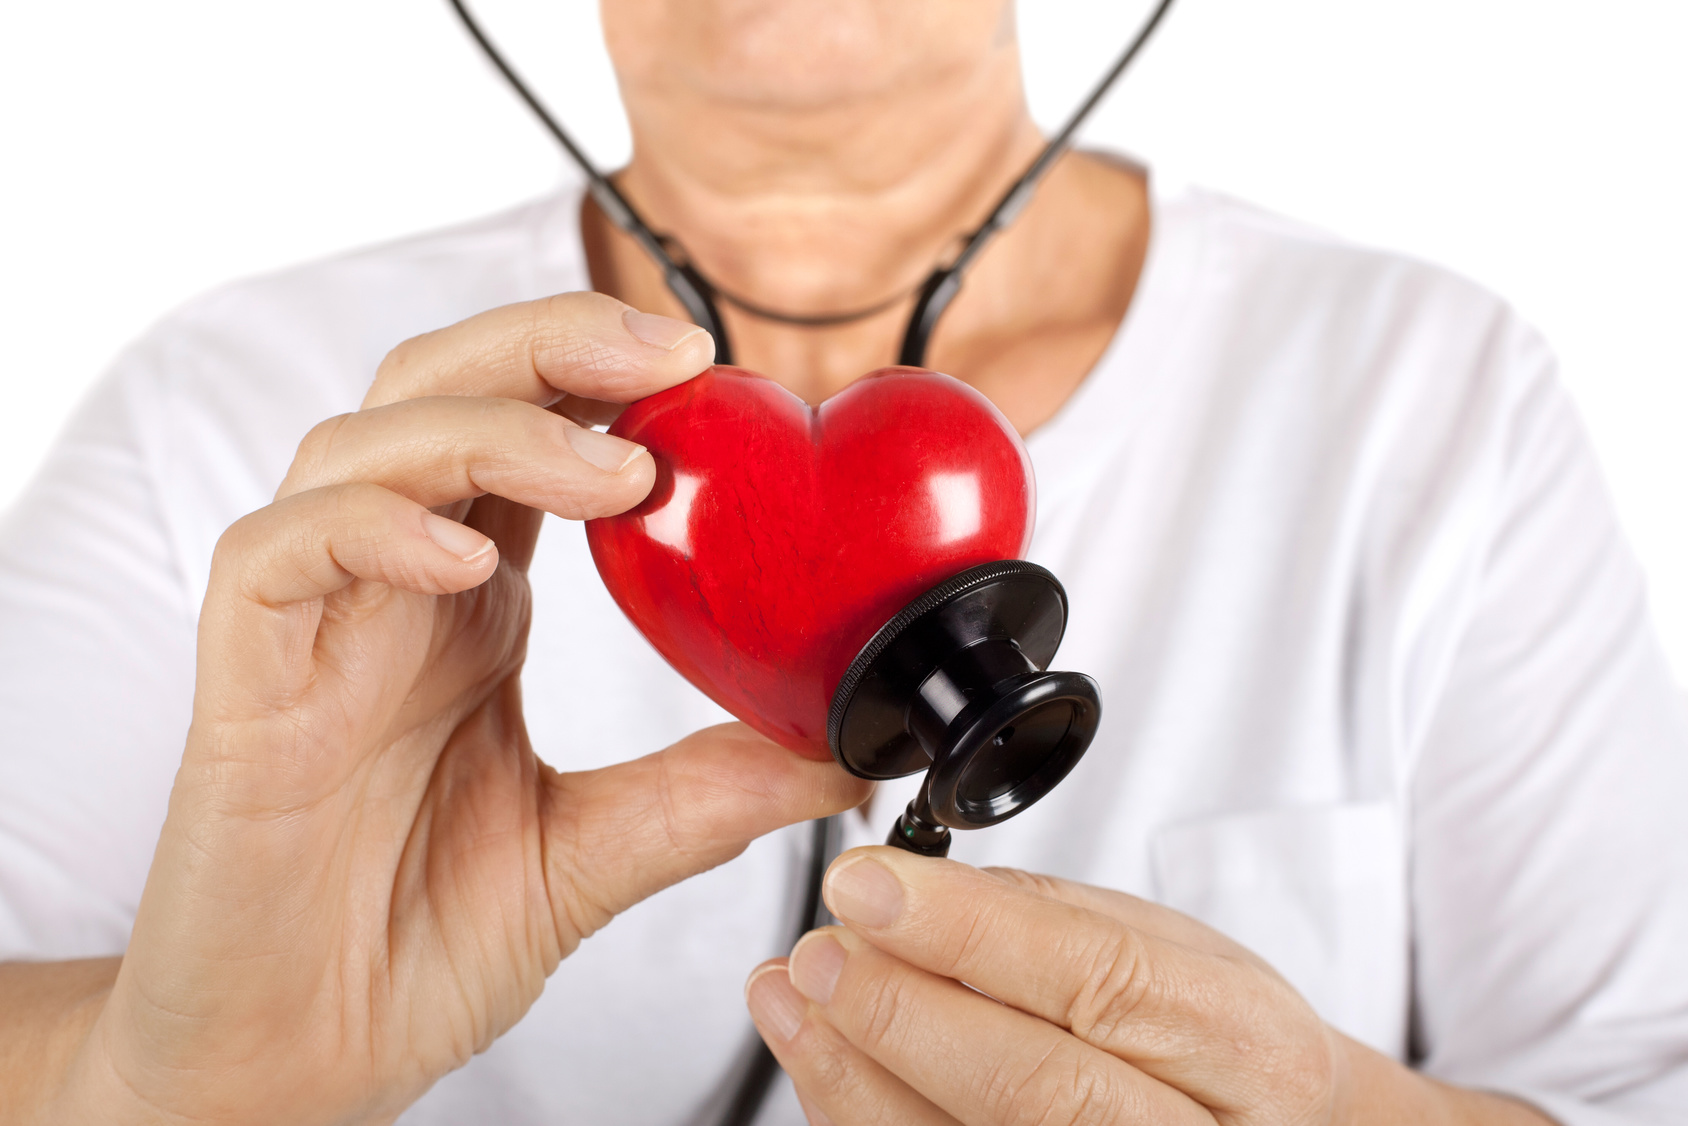 Cardiaques, psychiatriques, respiratoires… Quelles maladies